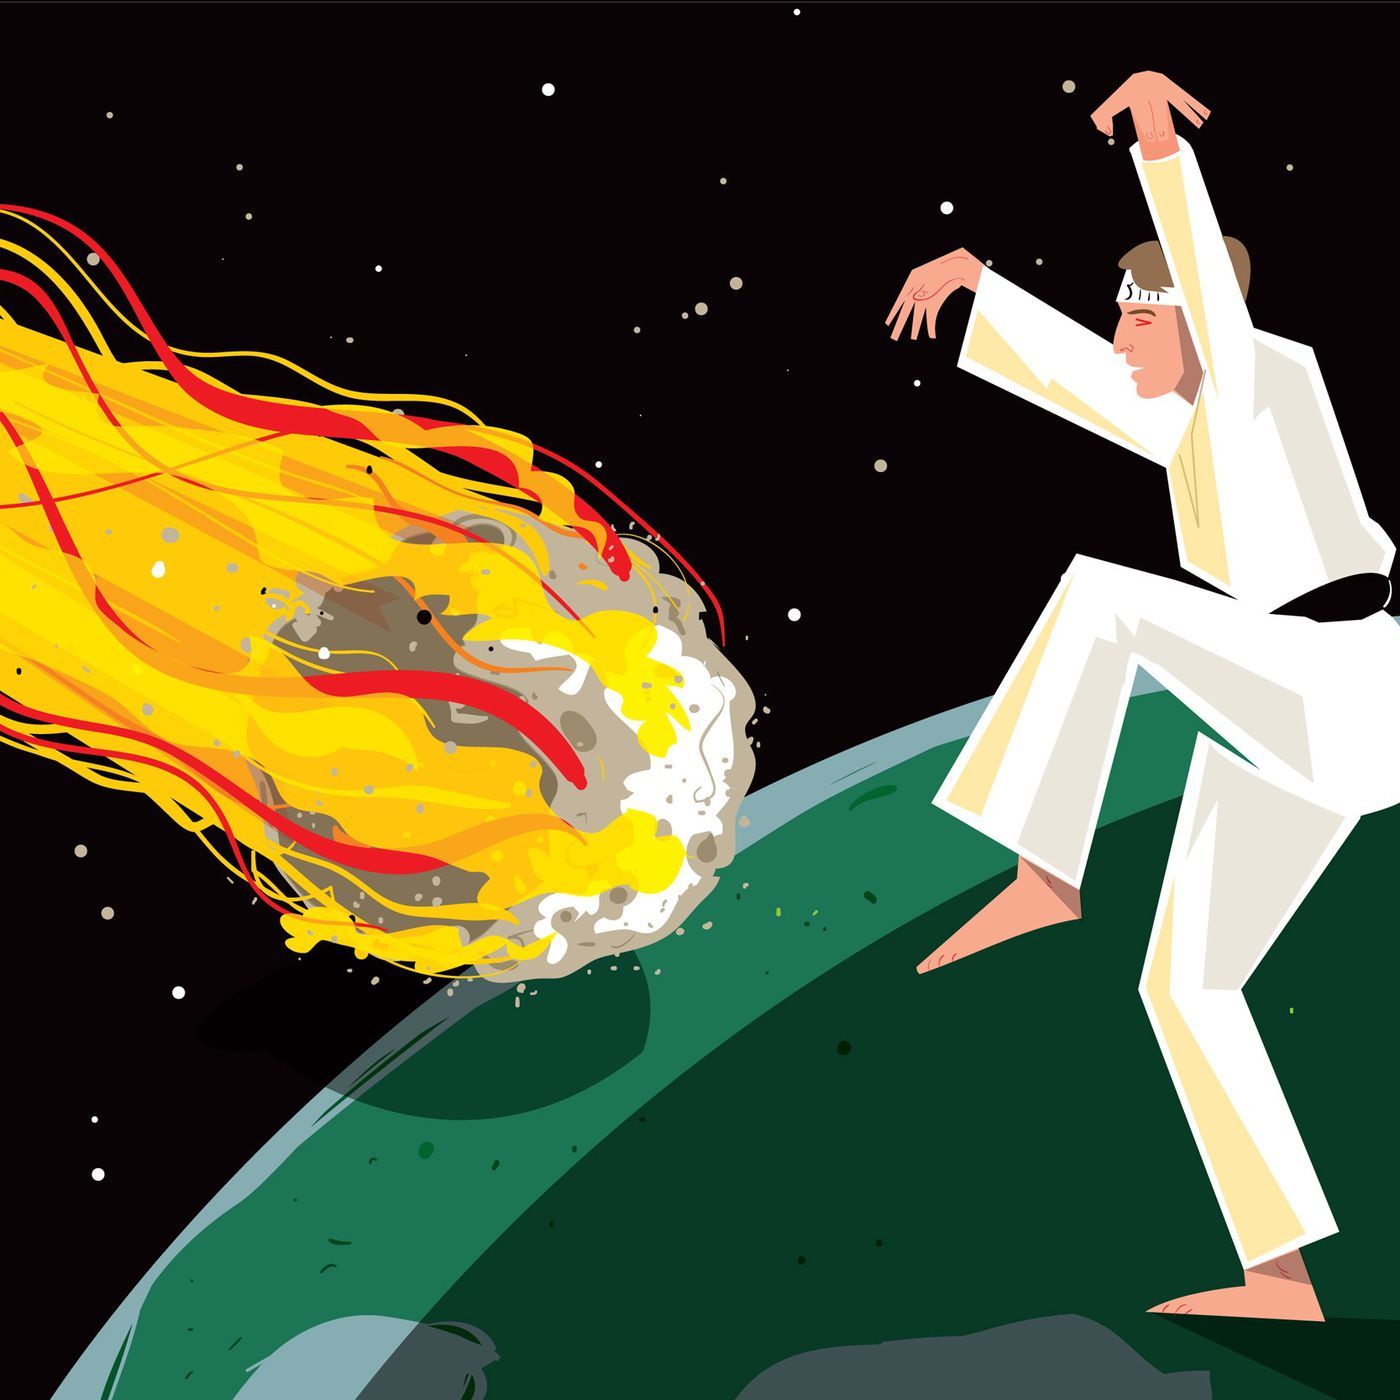 The 'Karate Kid' Crane Kick vs. the 'Deep Impact' Comet: Which Had the Bigger Impact?